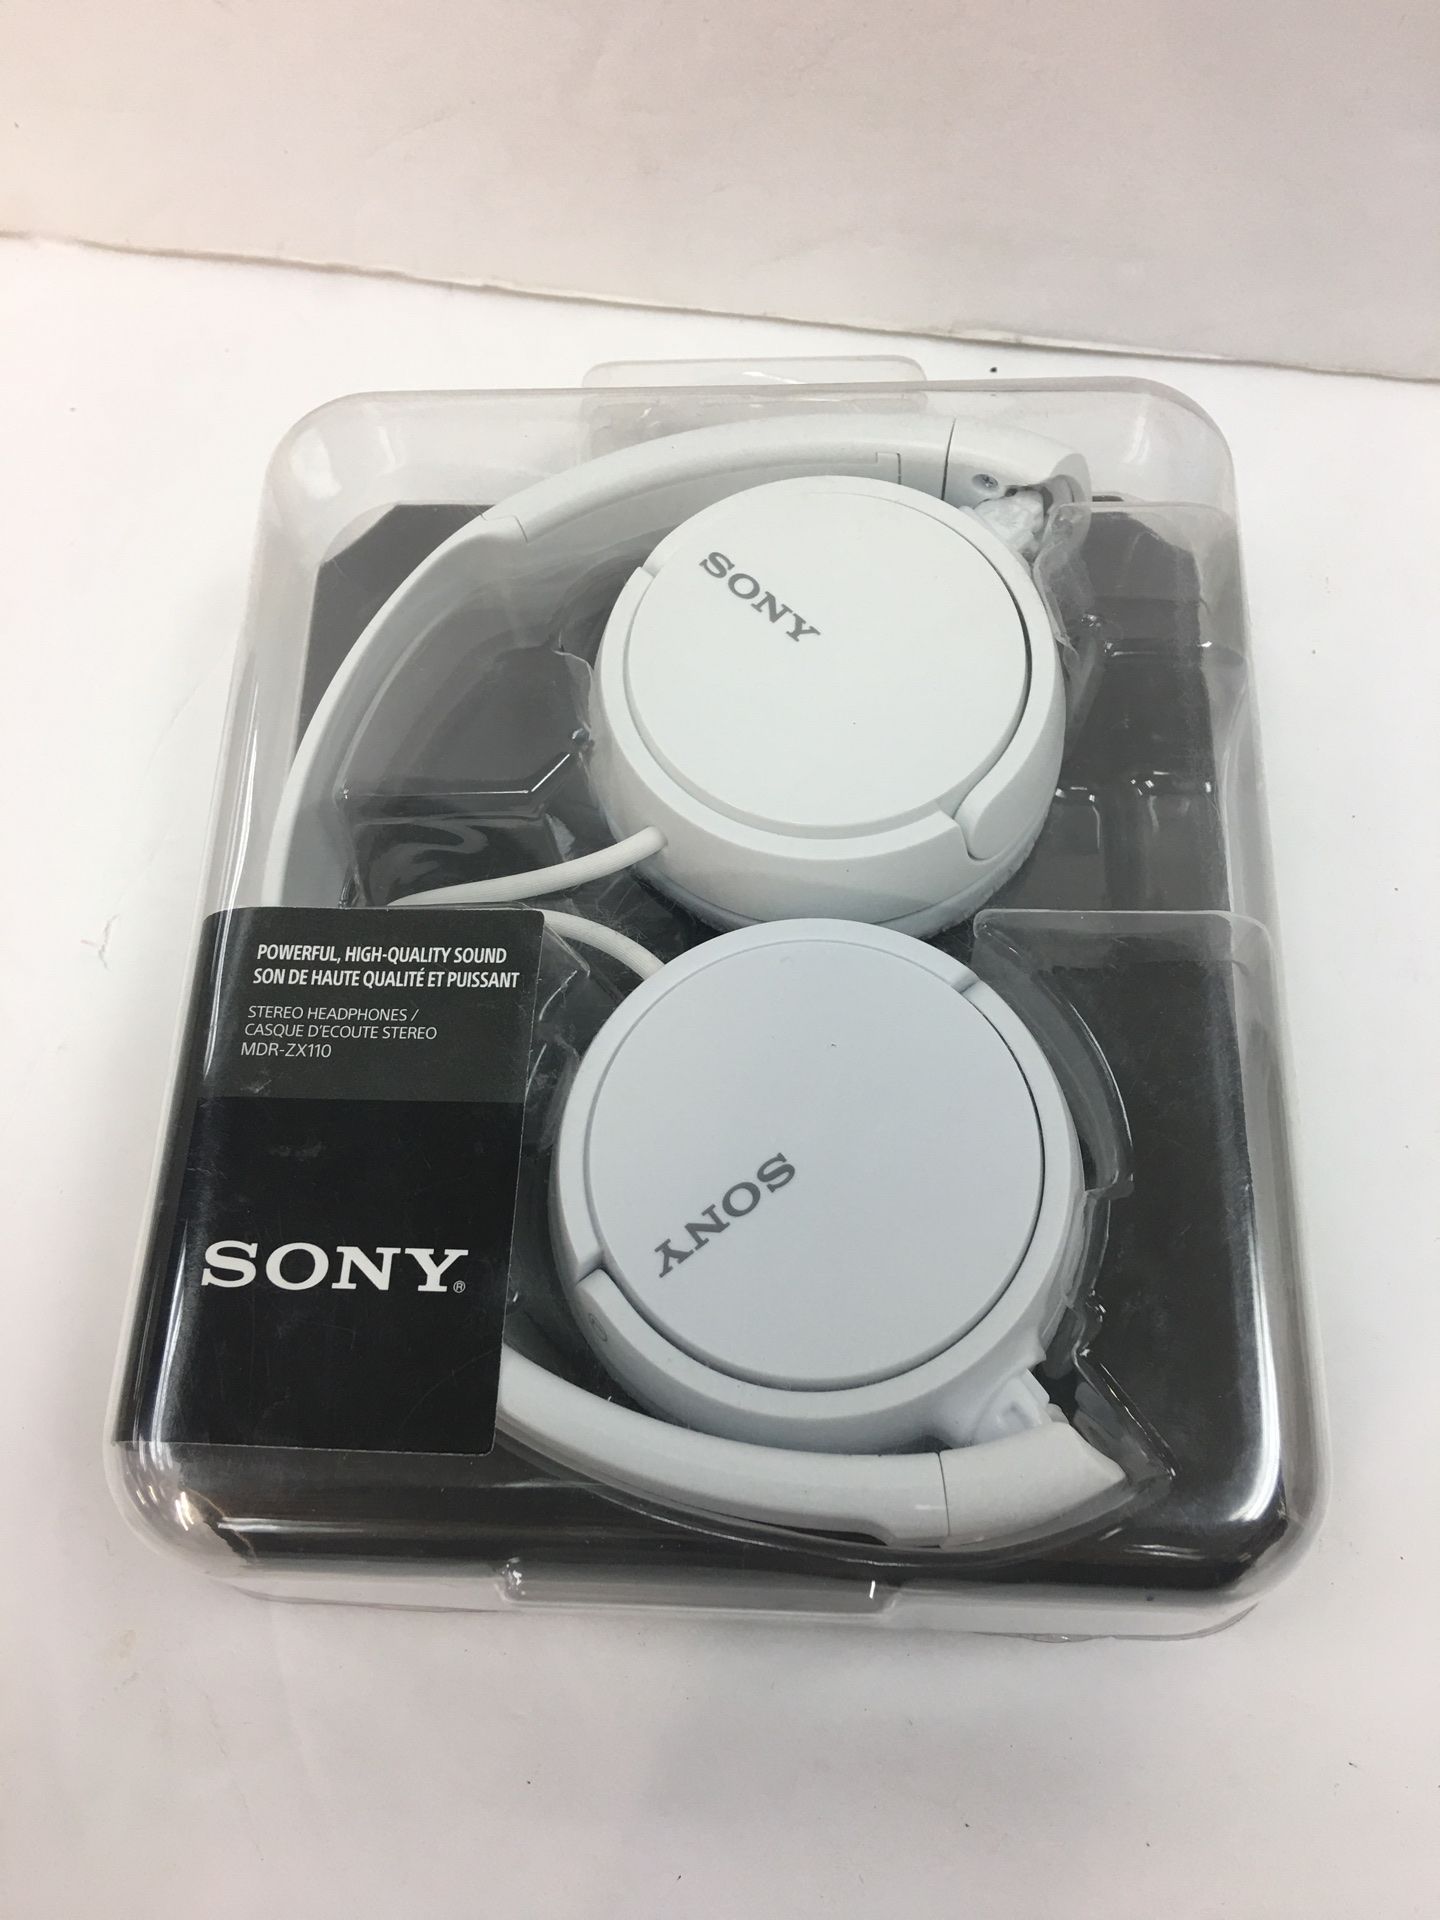 Sony powerful high quality sound headphones new